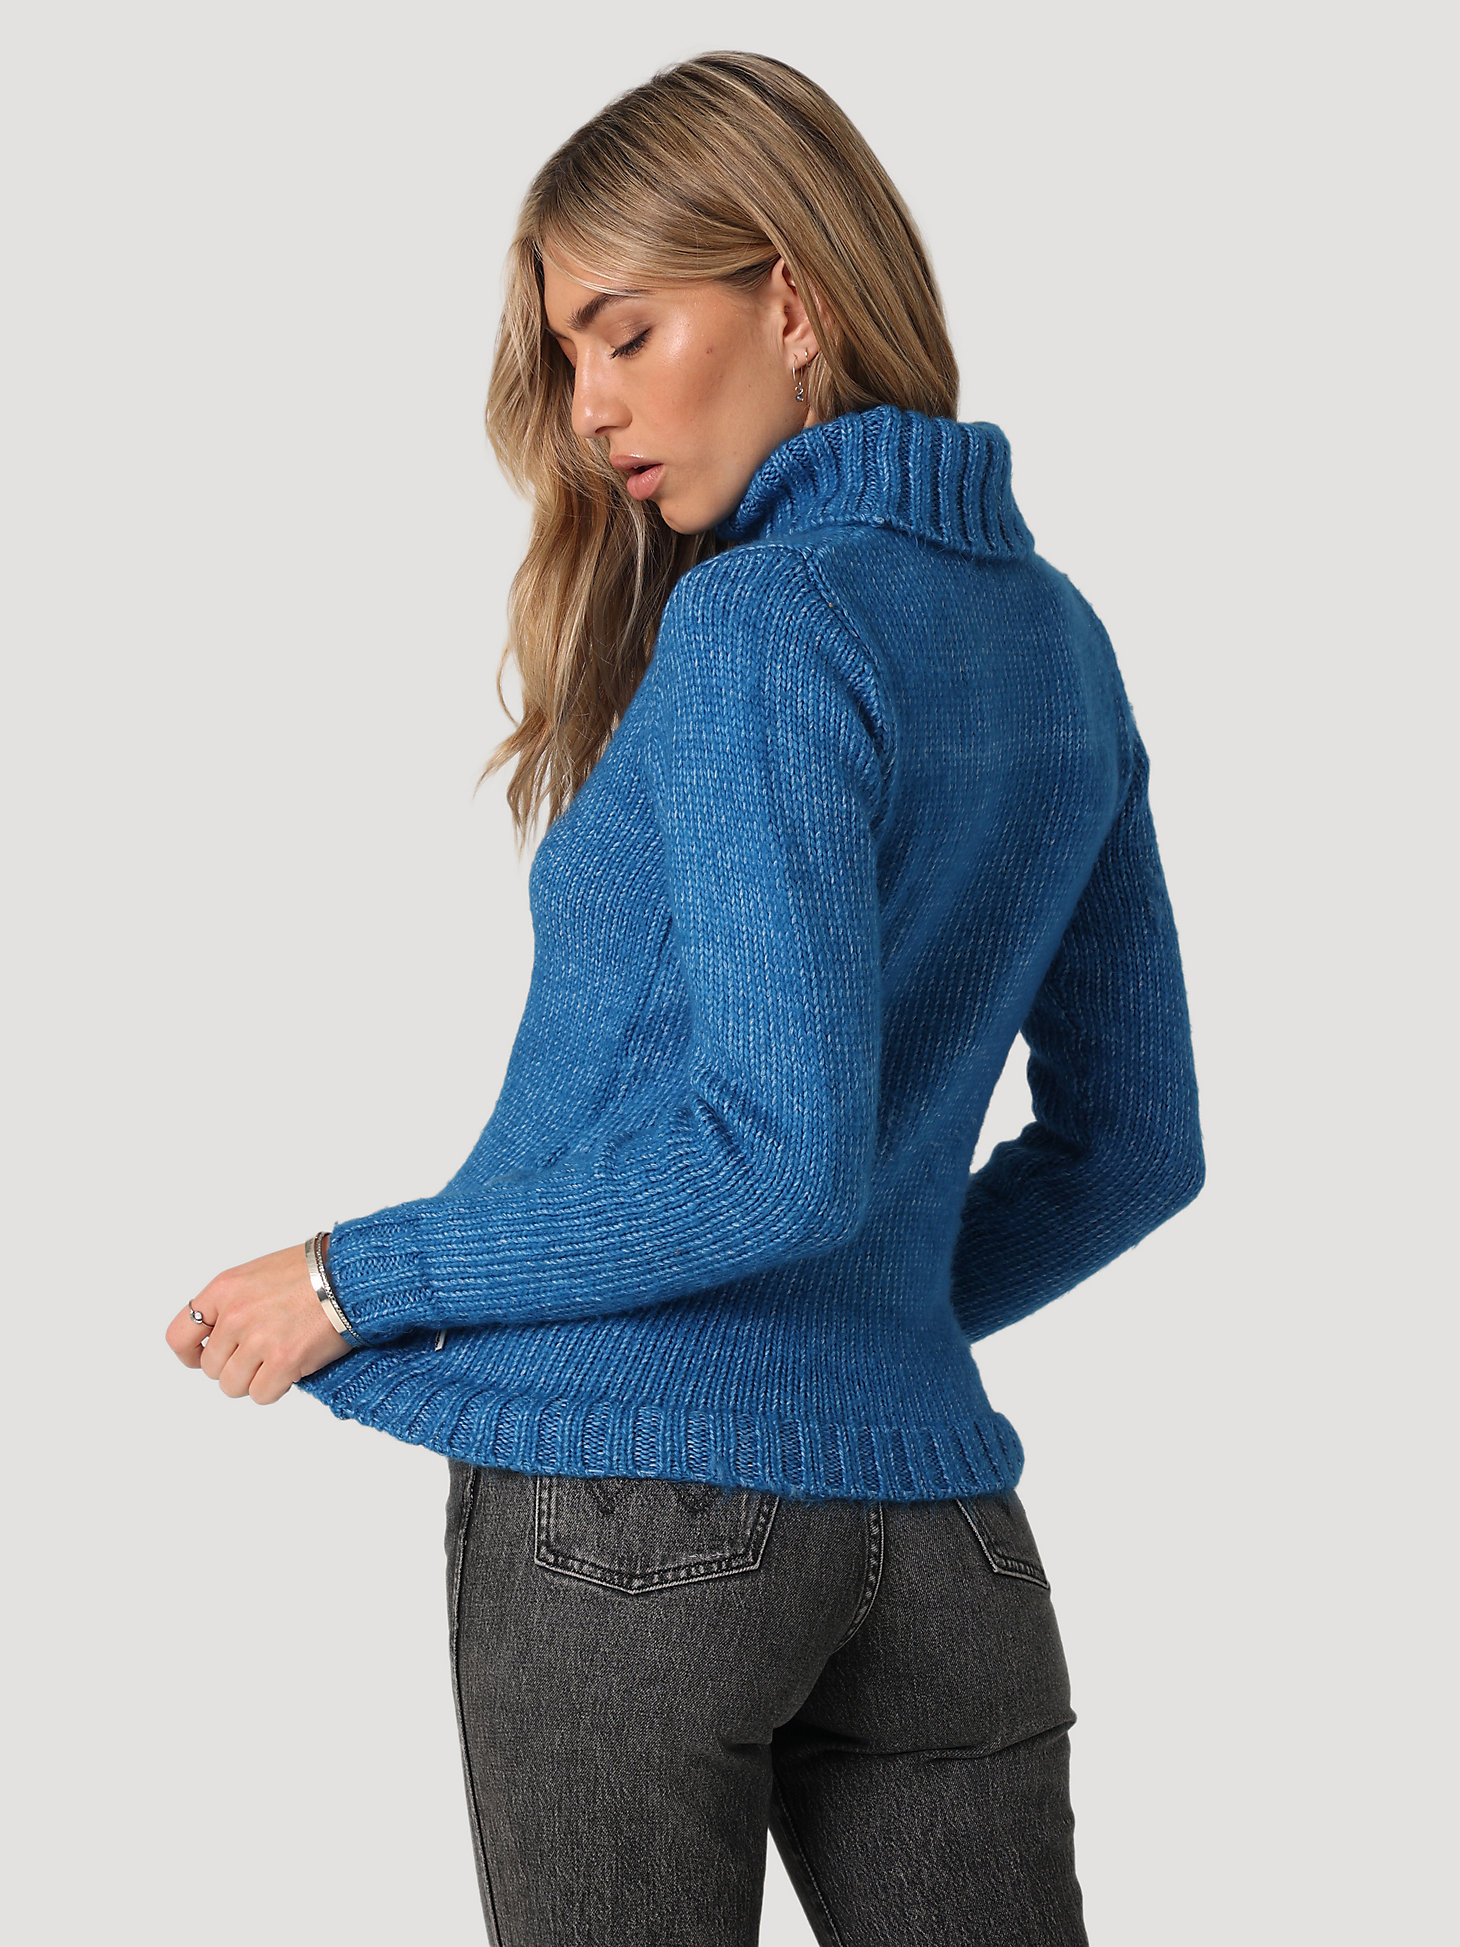 Women's Plush Sweater in Daphne Blue alternative view 1